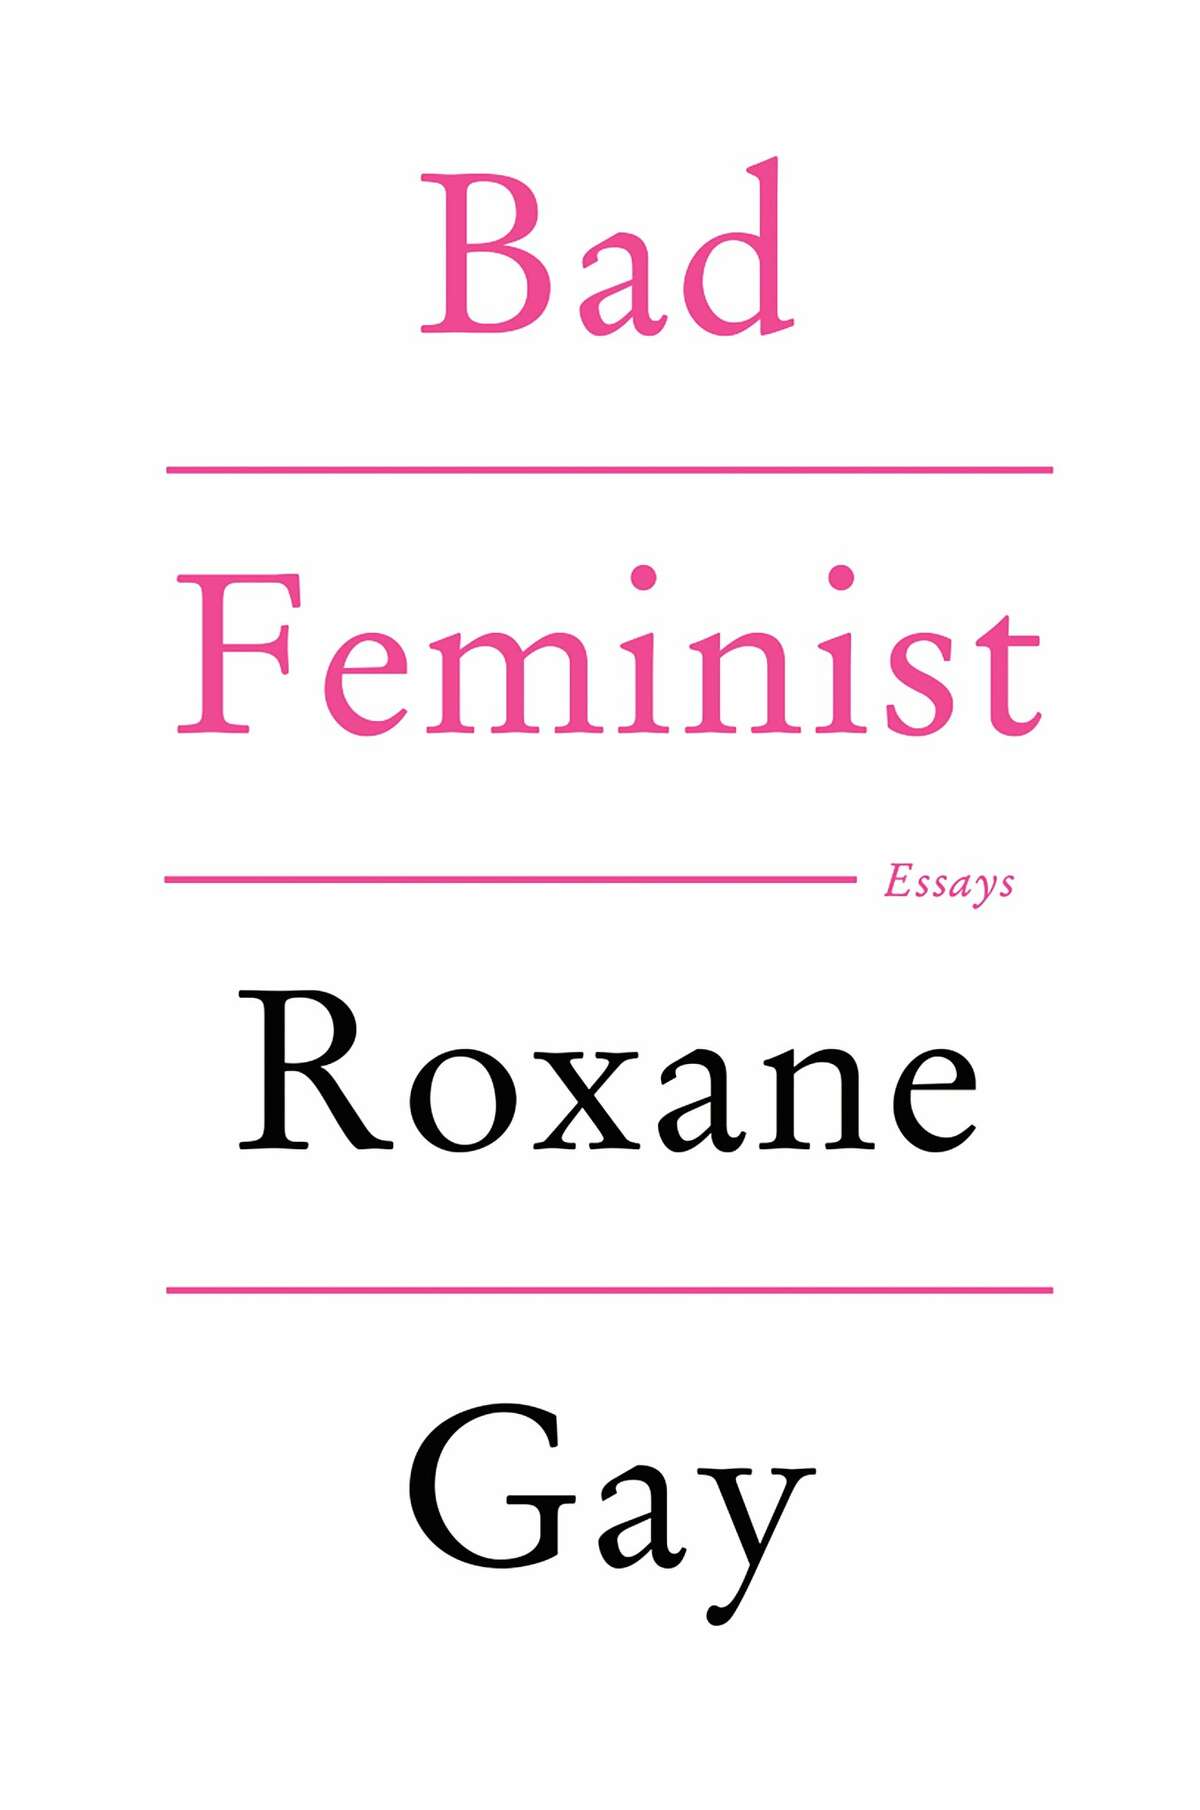 "Bad Feminist," by Roxane Gay